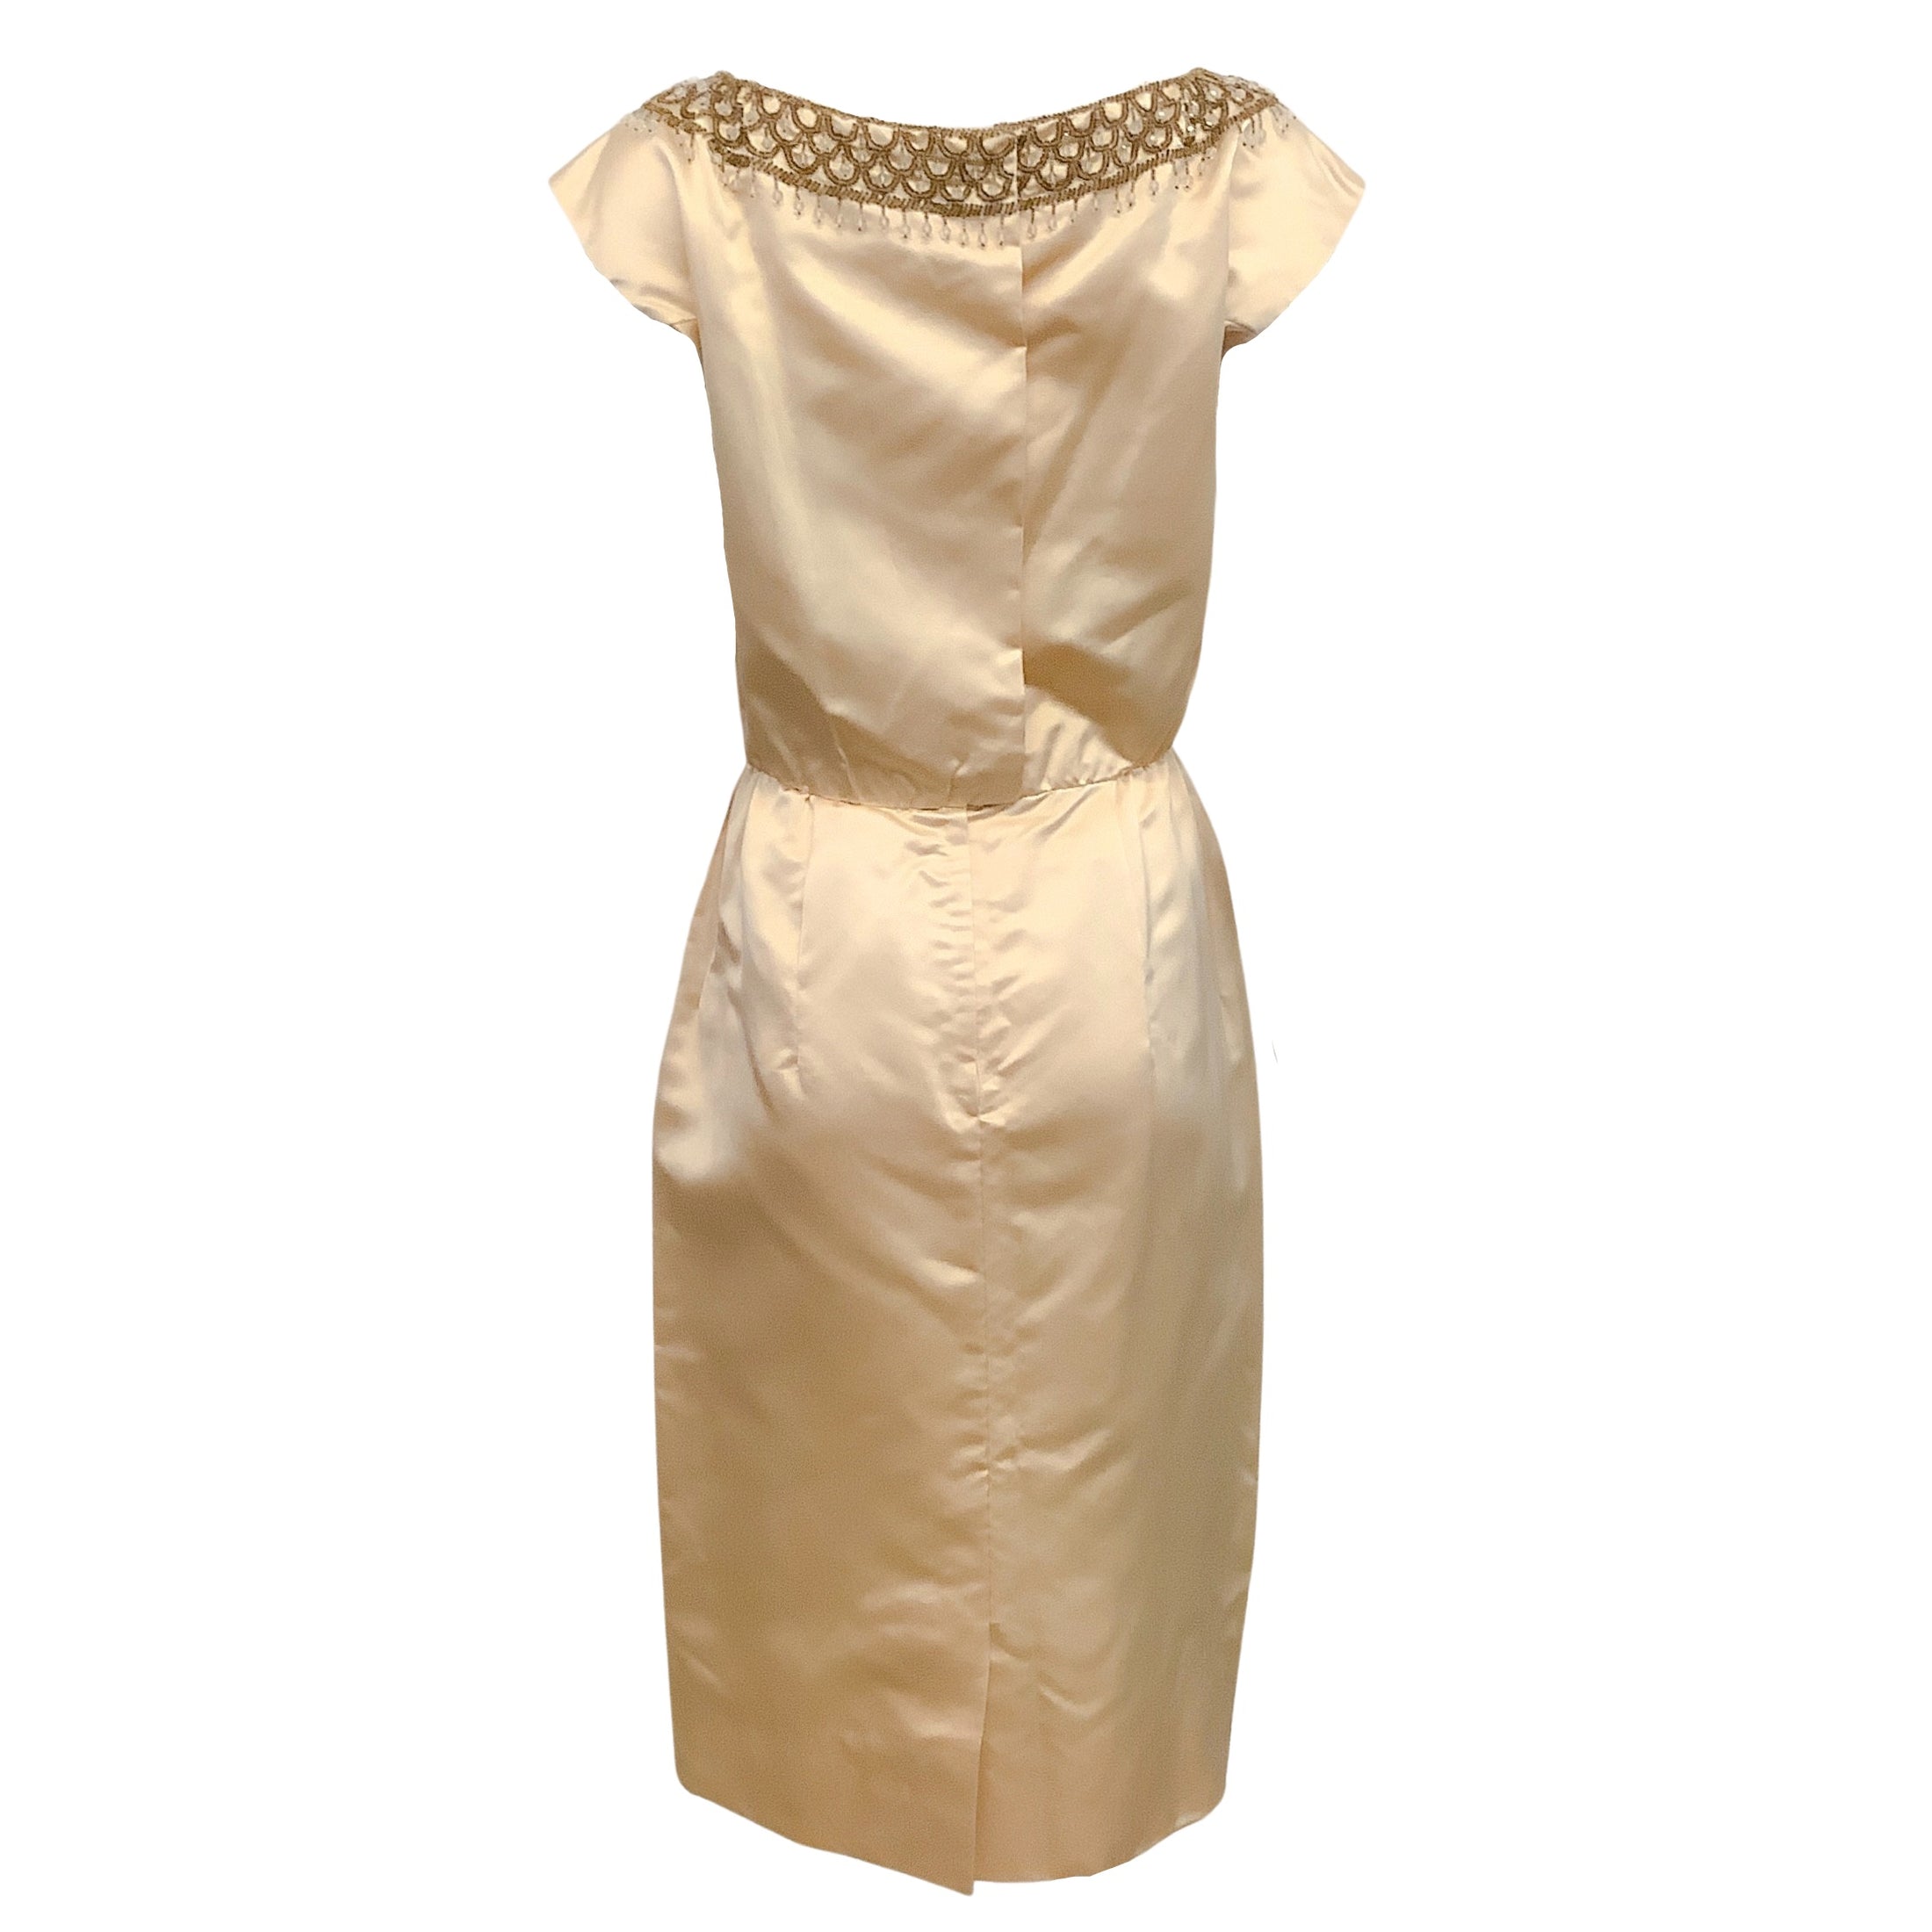 Lillie Rubin Champagne Silk Vintage Dress with Beaded Neckline